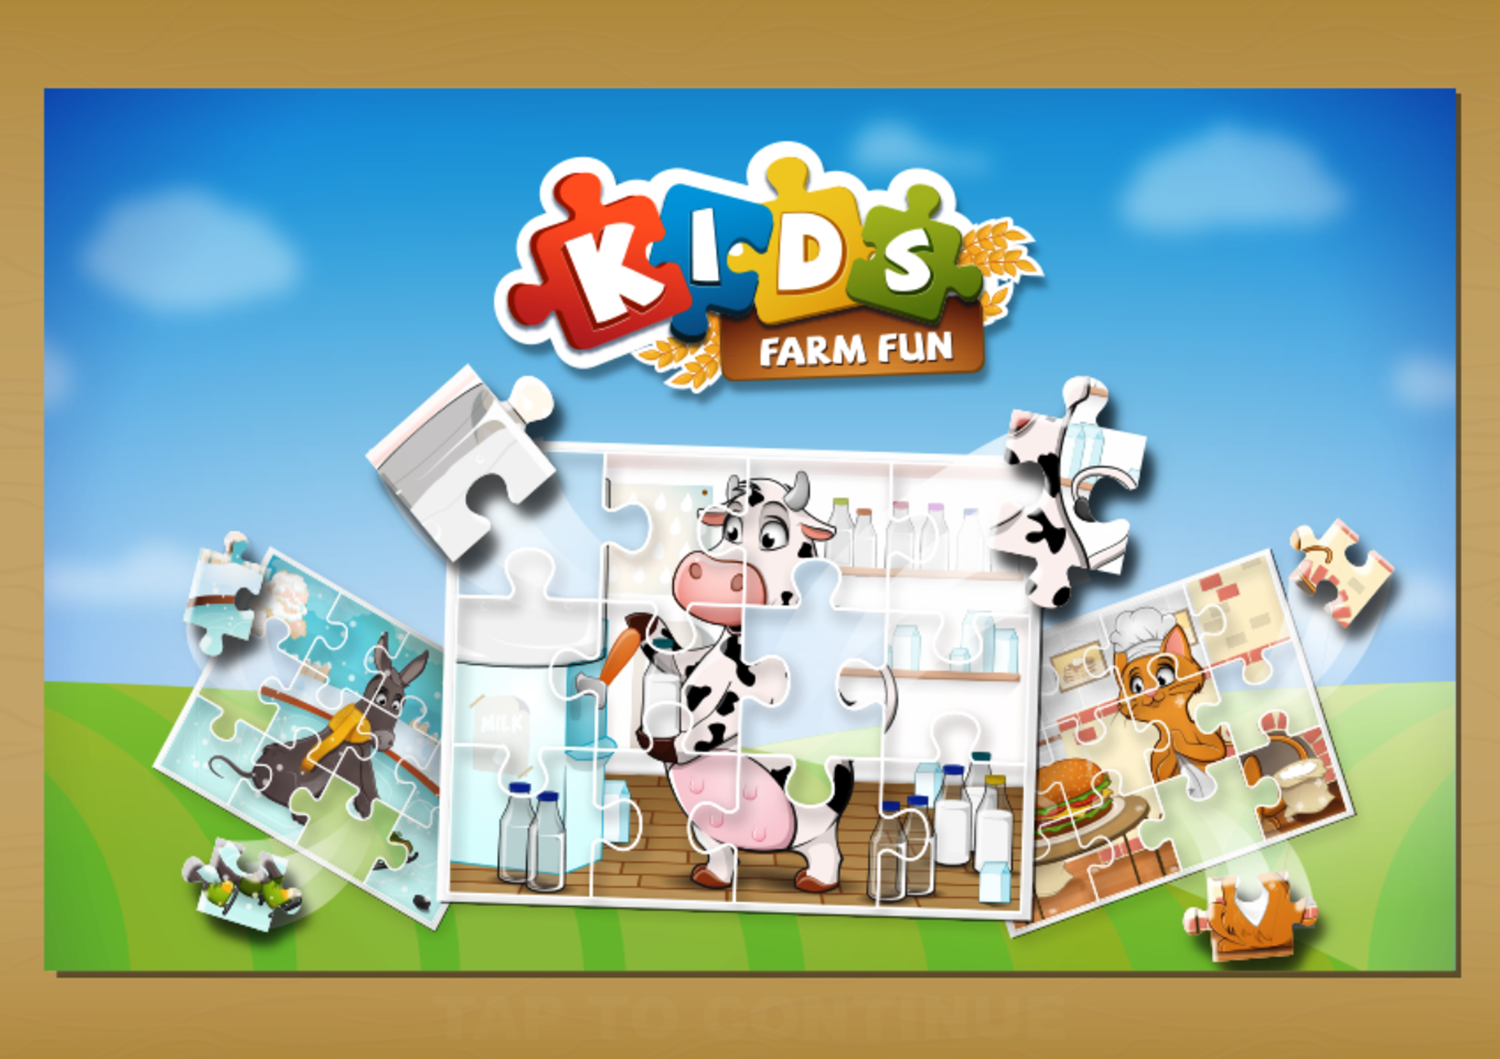 Kids Farm Fun Game Welcome Screen Screenshot.